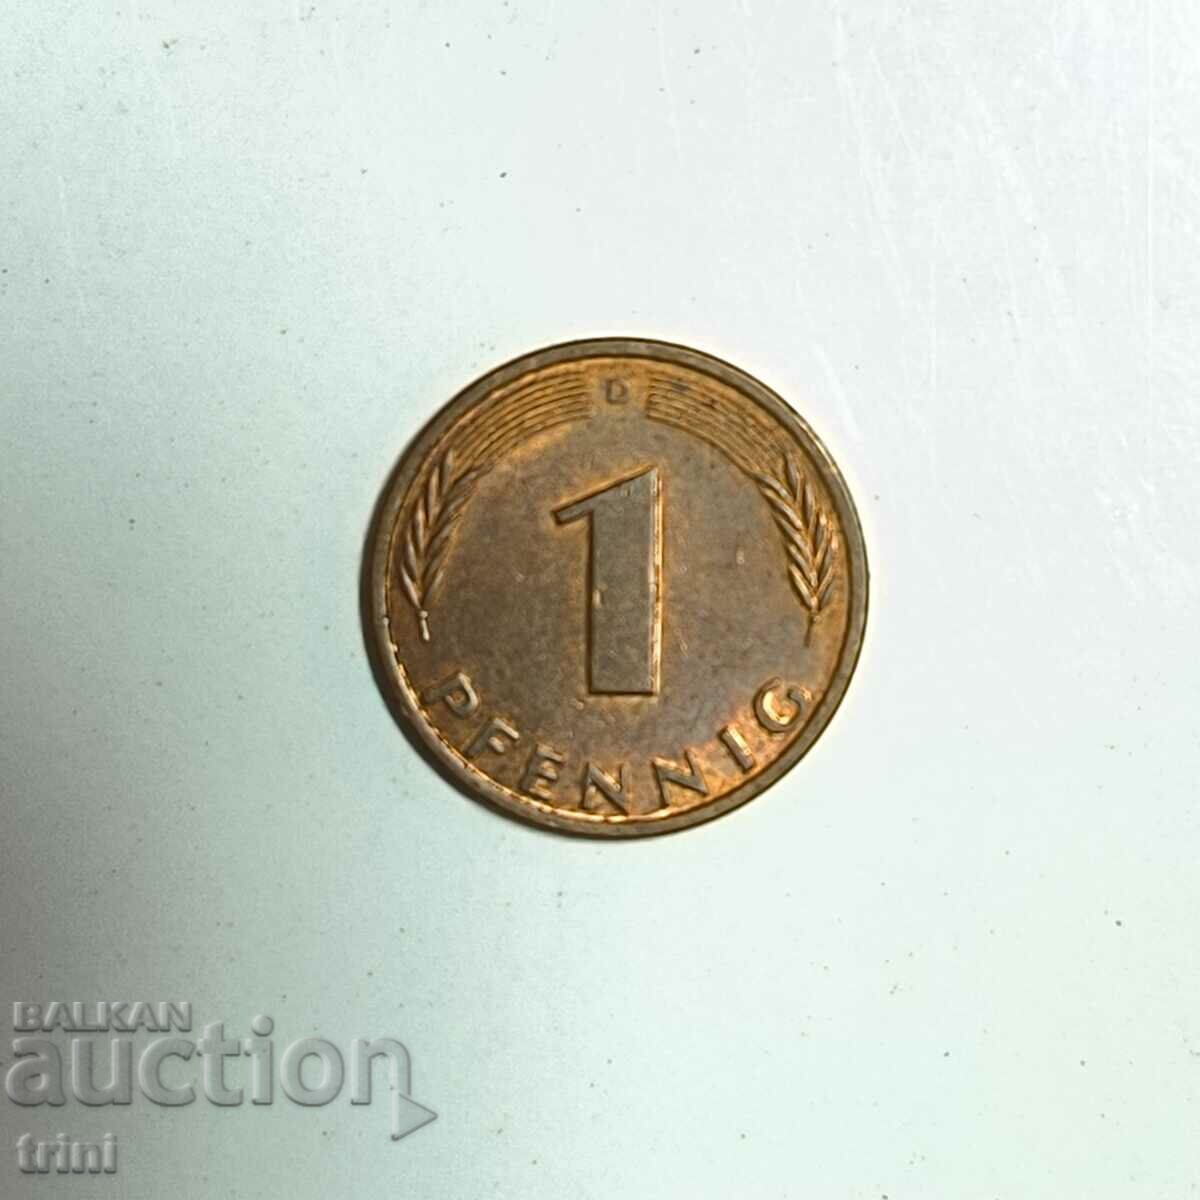 Germania 1 pfennig 1991 anul „D” - Munchen e183